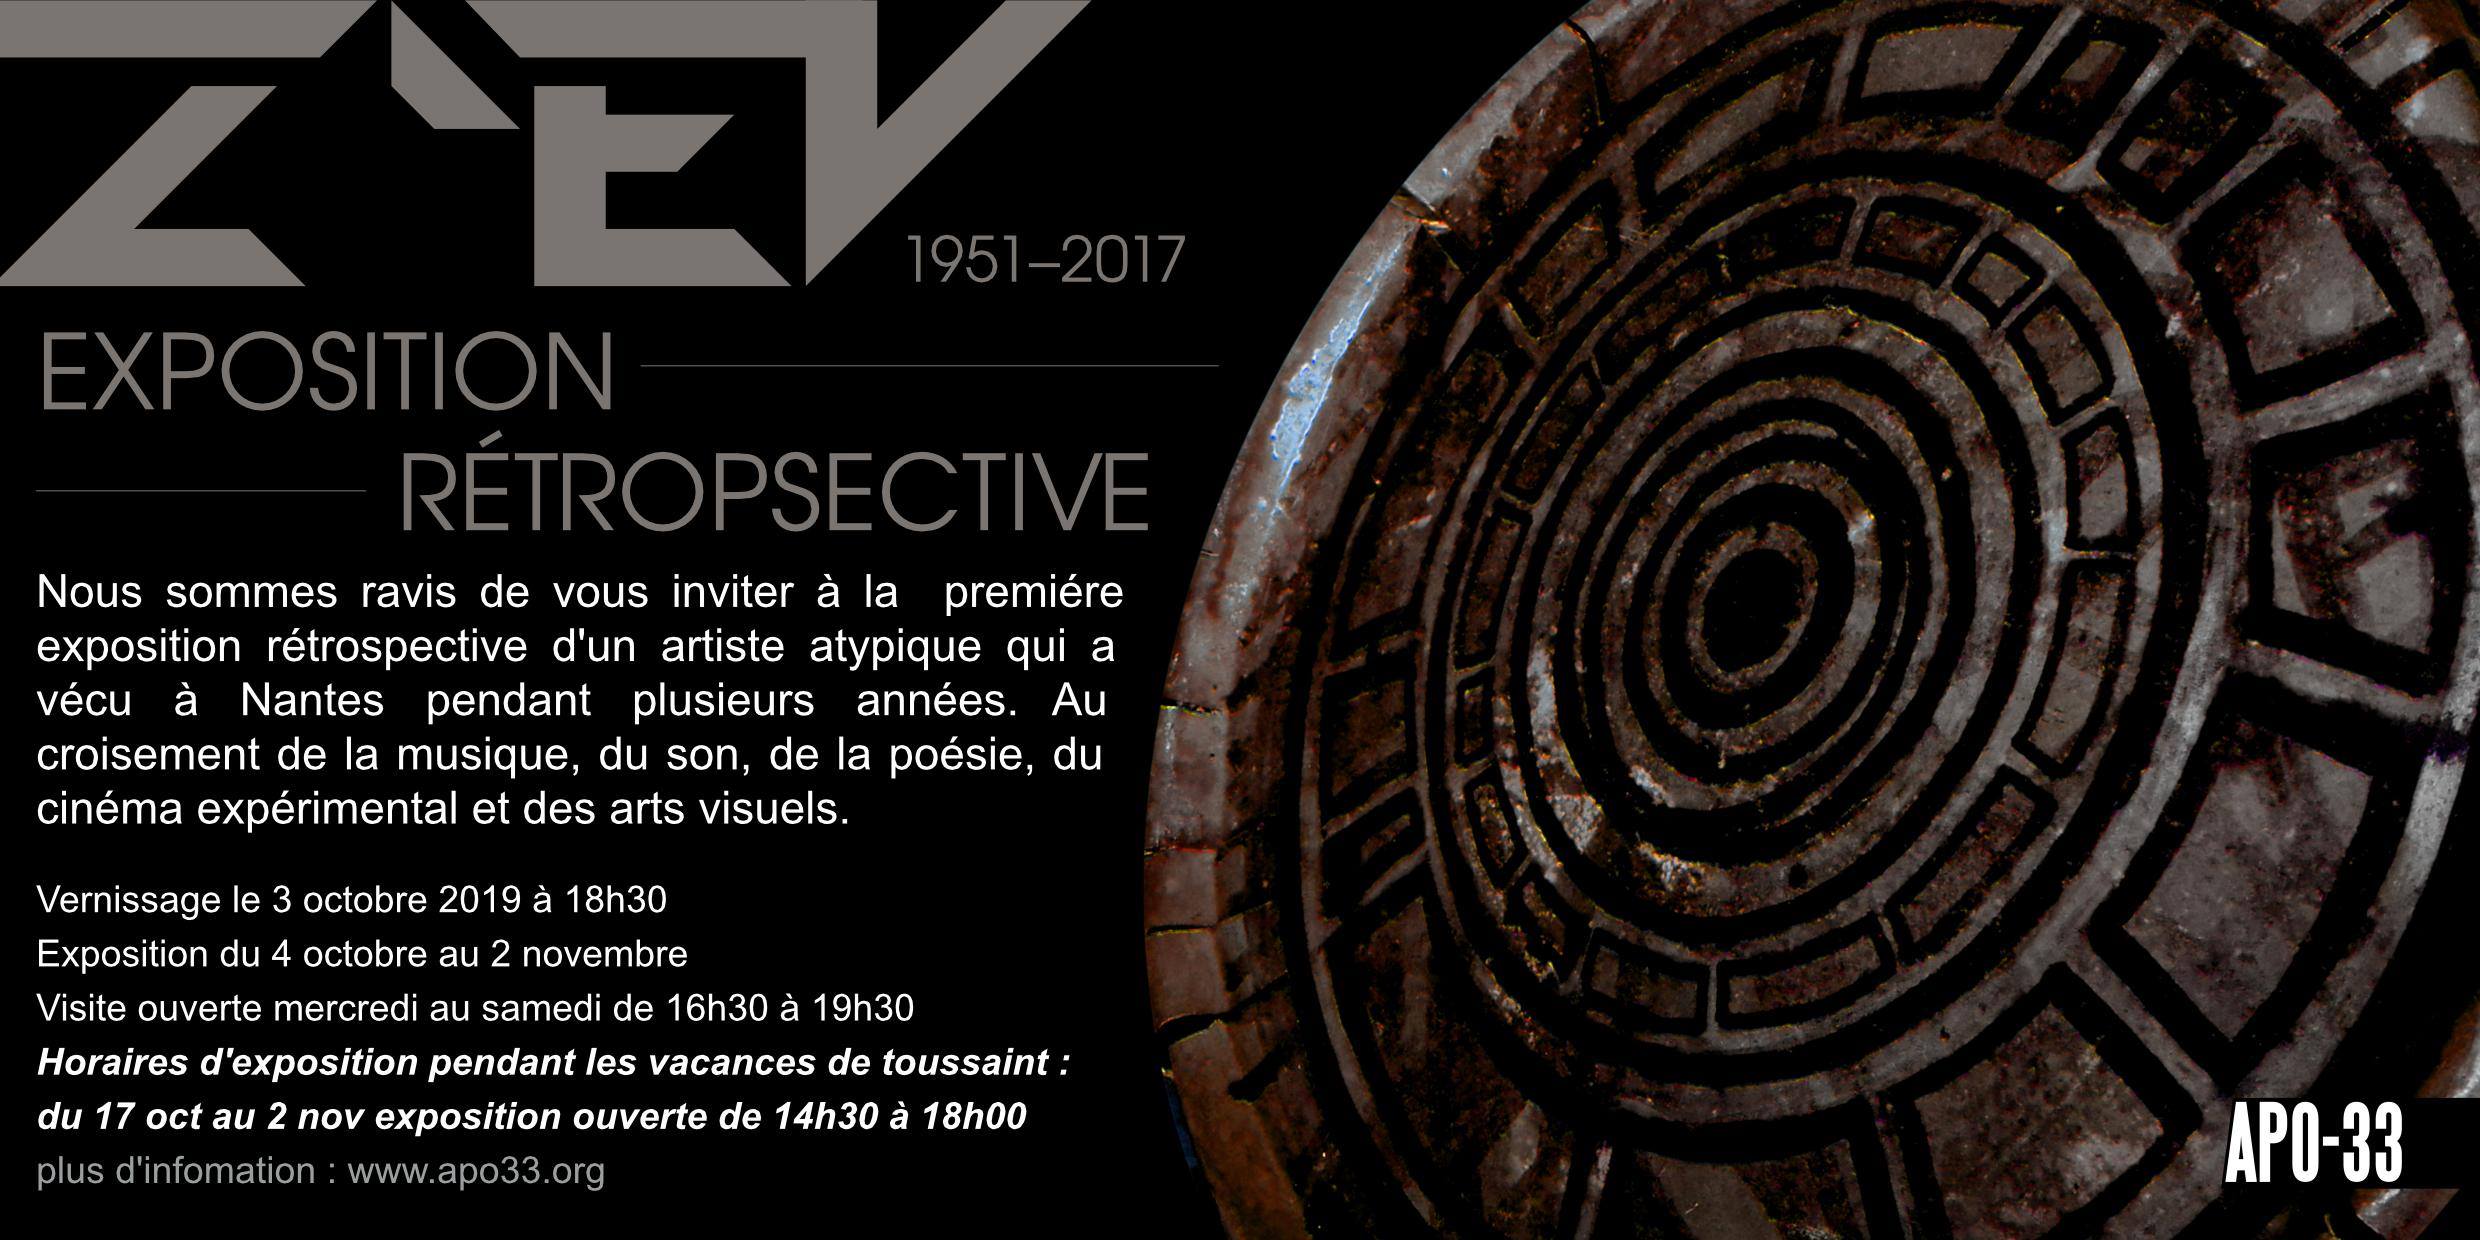 Exhibition-retrospective : Z’EV